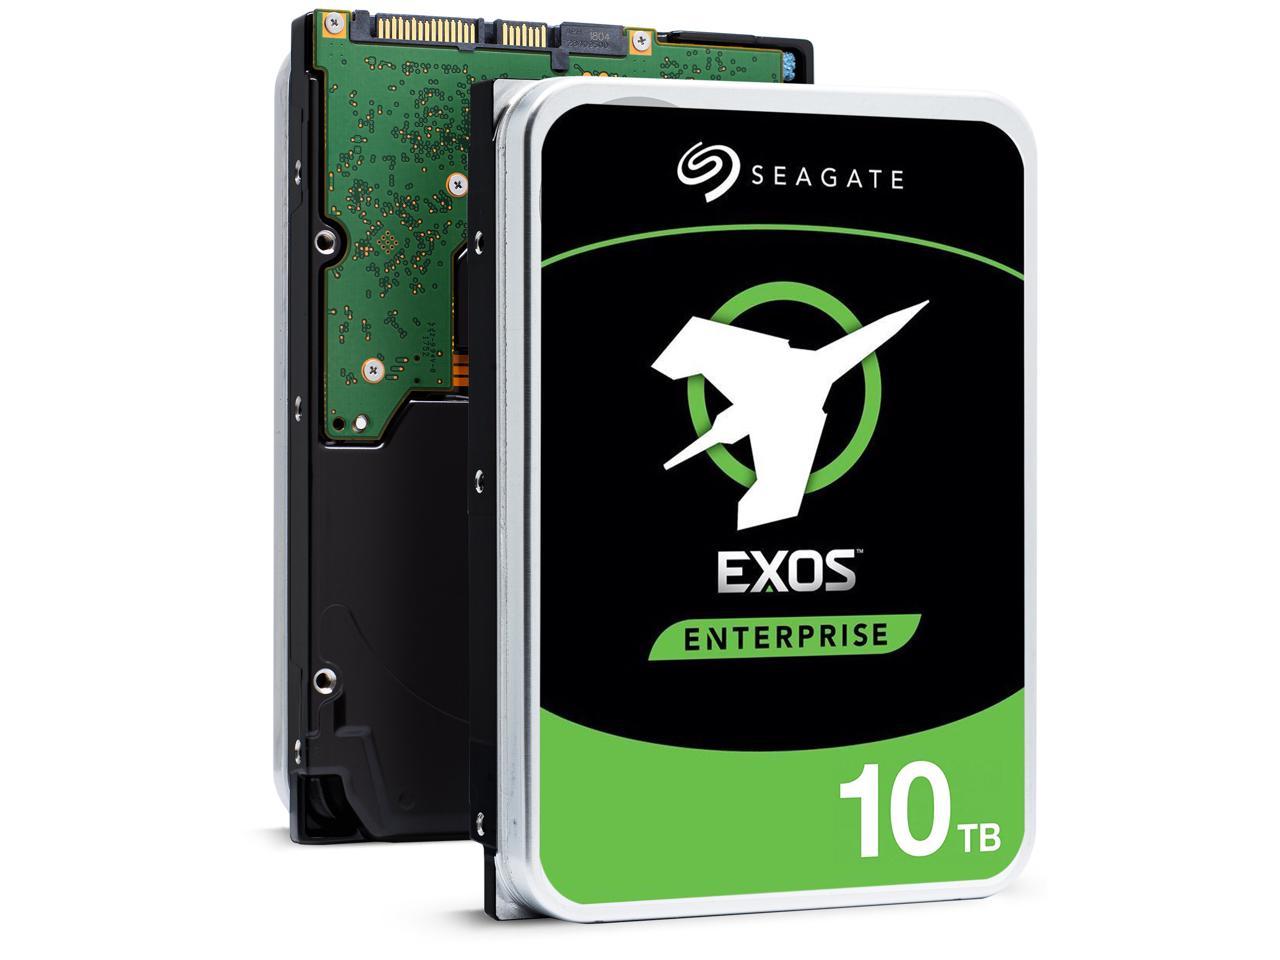 Seagate Exos X16 10Tb 7200 Rpm Sata 6Gb/S 3.5-Inch Enterprise Hard Drive (St10000Nm001G)